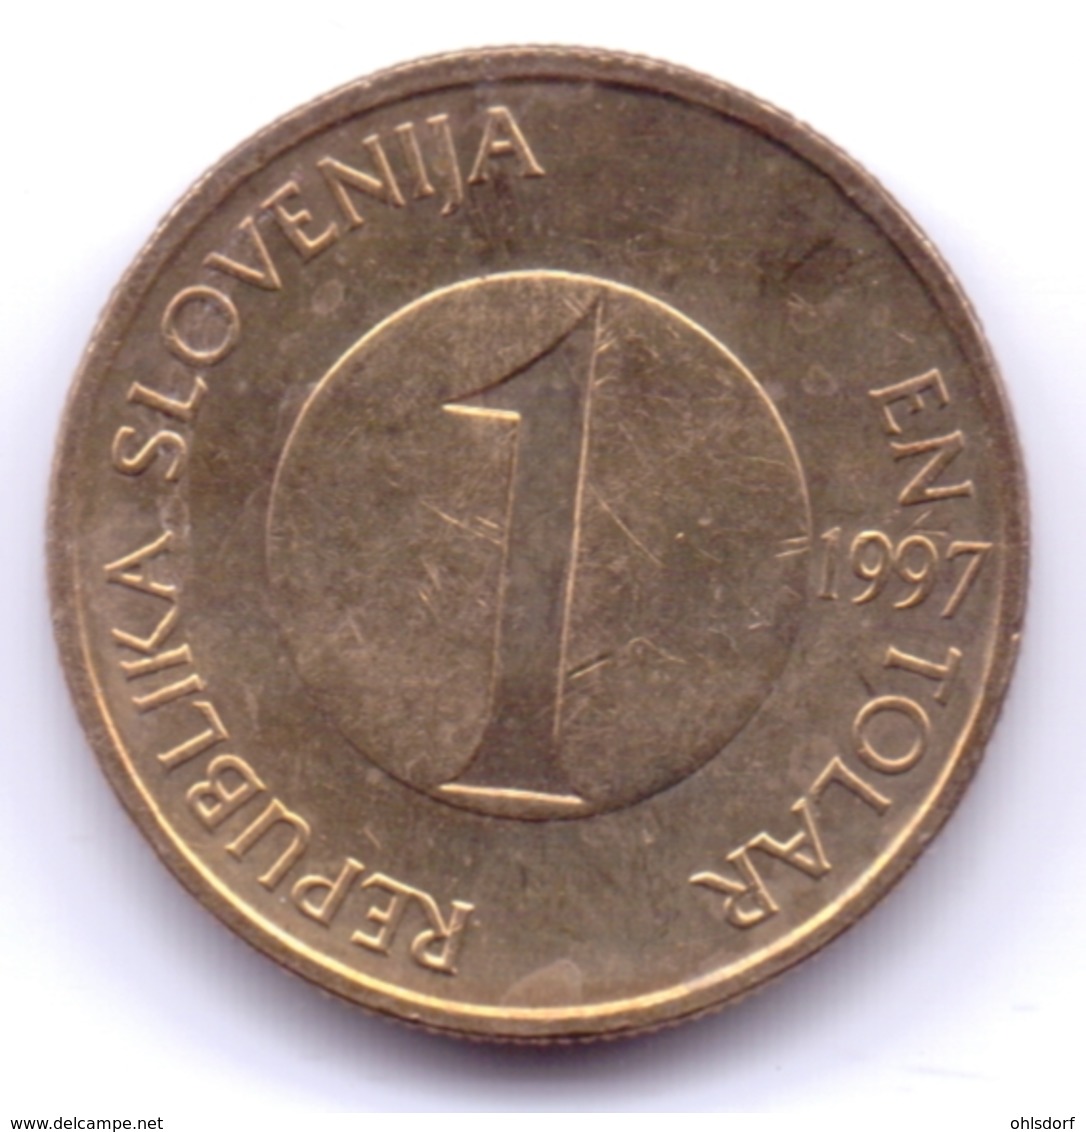 SLOVENIA 1997: 1 Tolar, KM 4 - Slovenia